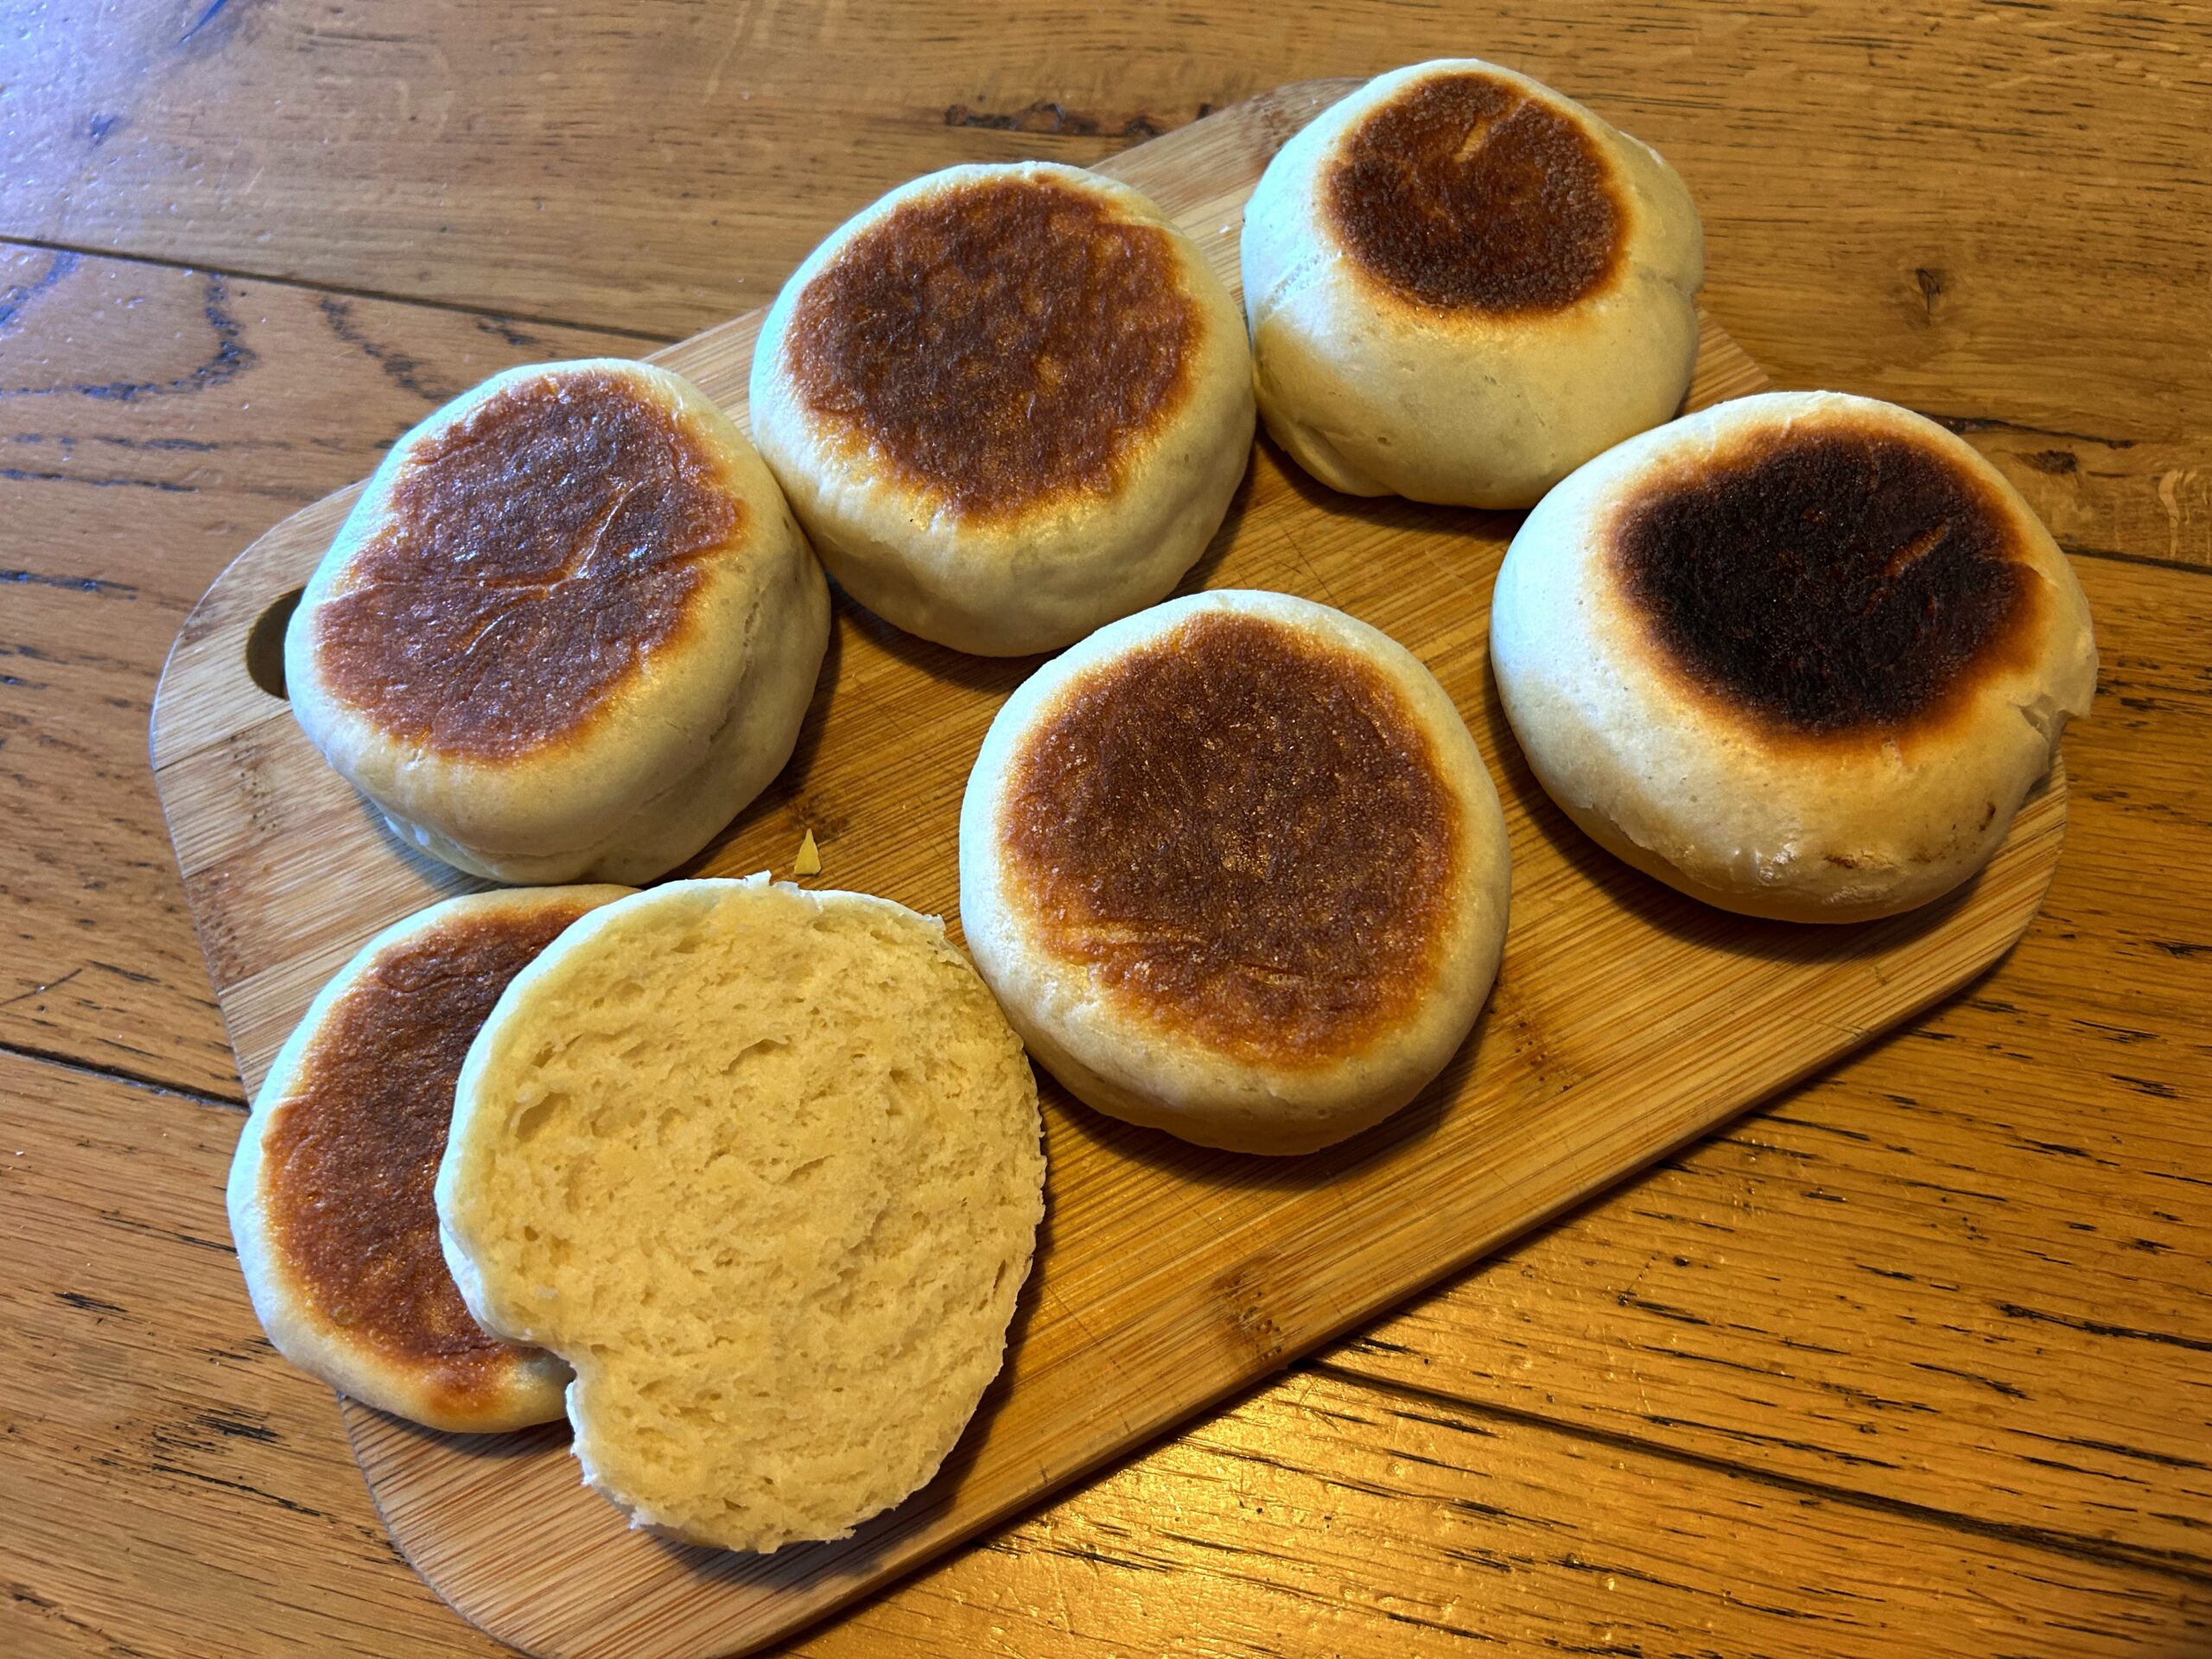 Muffin pour realiser des mcmuffin